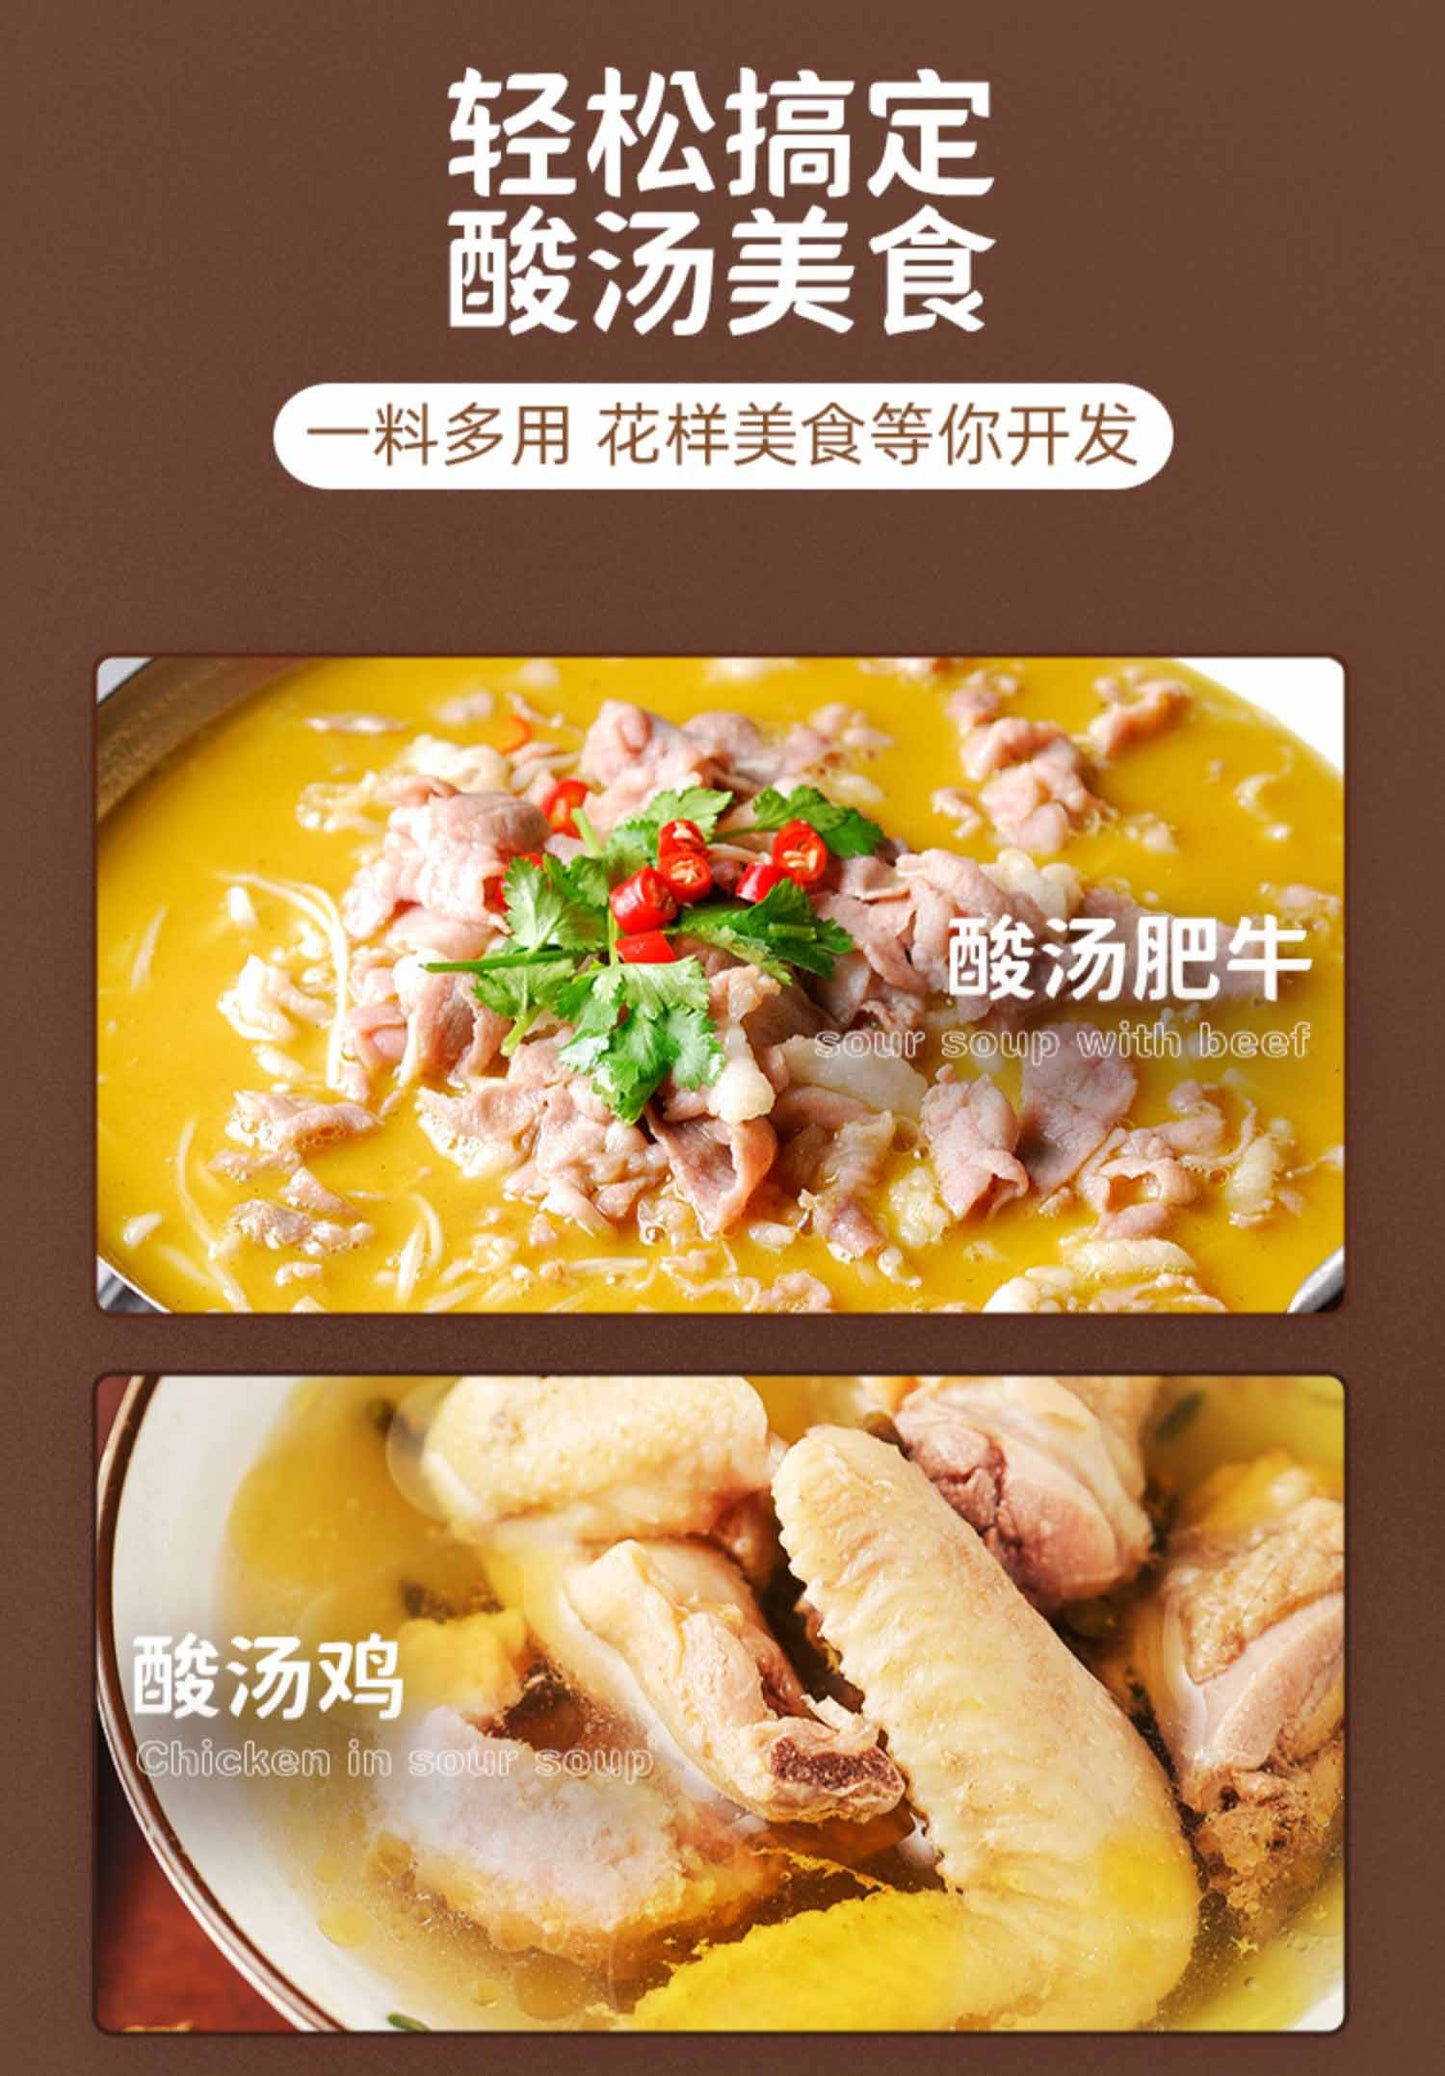 Dezhuang - Lao Tan Sauerkraut Fish Seasoning Original Flavor Hot Pot 350g